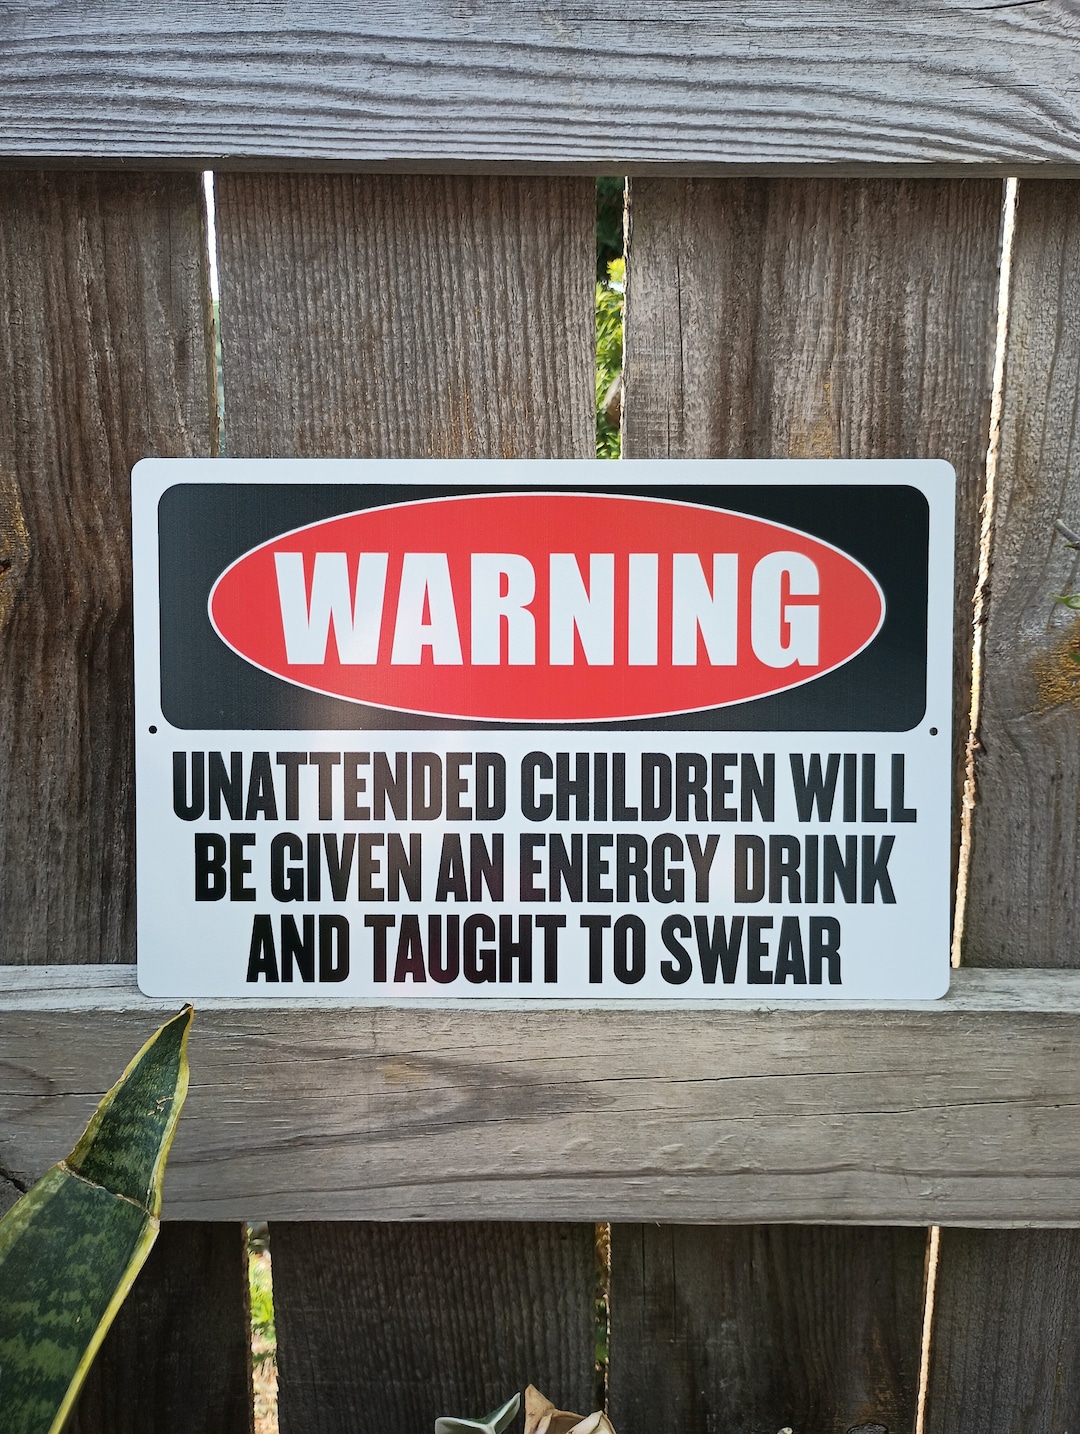  Metal Signs Man Cave Warning Children Left Unattended